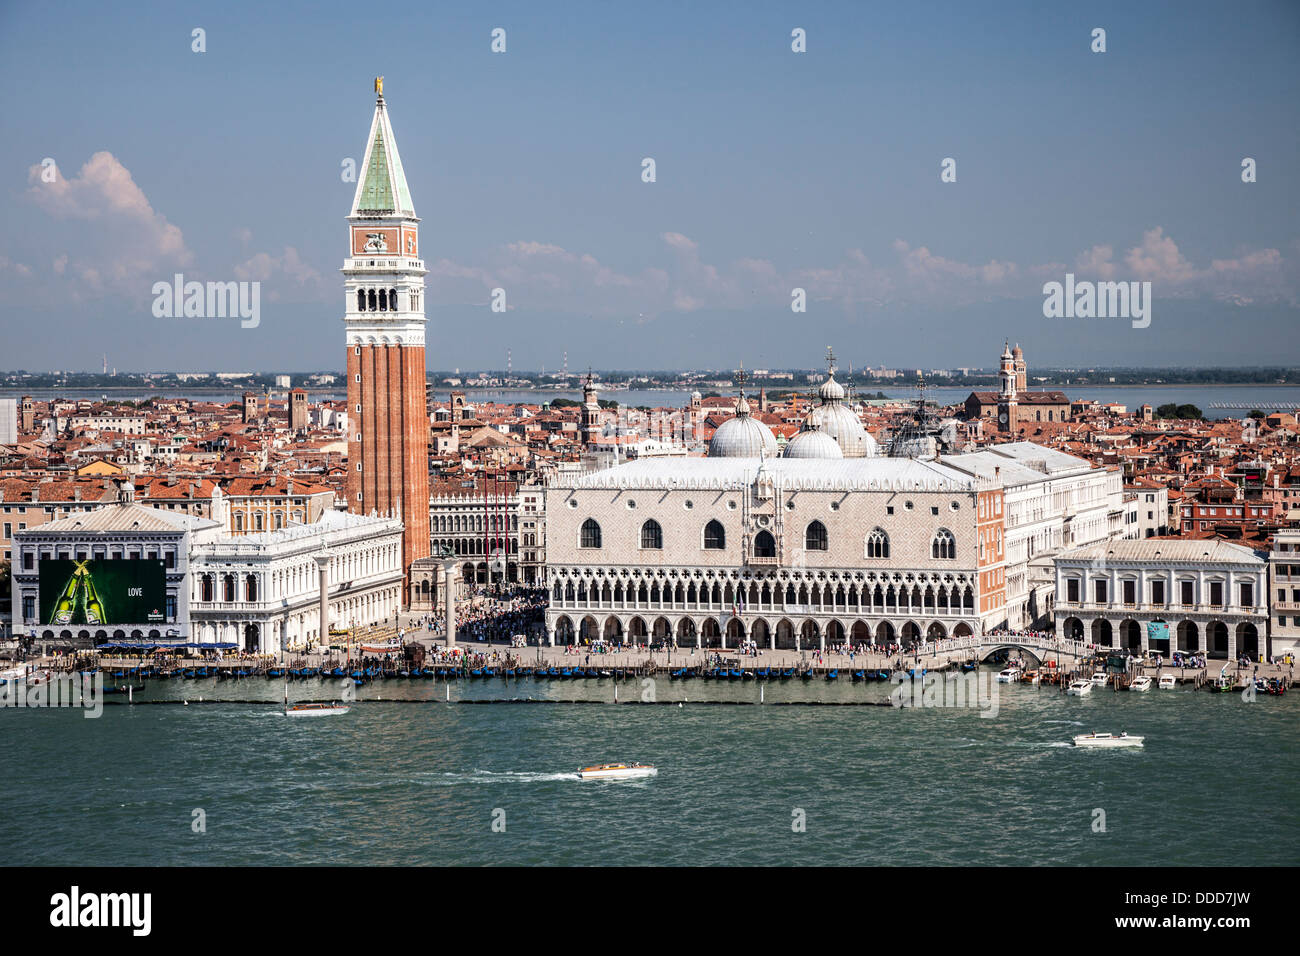 At Venice, the St Mark's Square, the Doge's Palace and a part of the lagoon.  A Venise, la place St Marc, le palais des Doges. Stock Photo